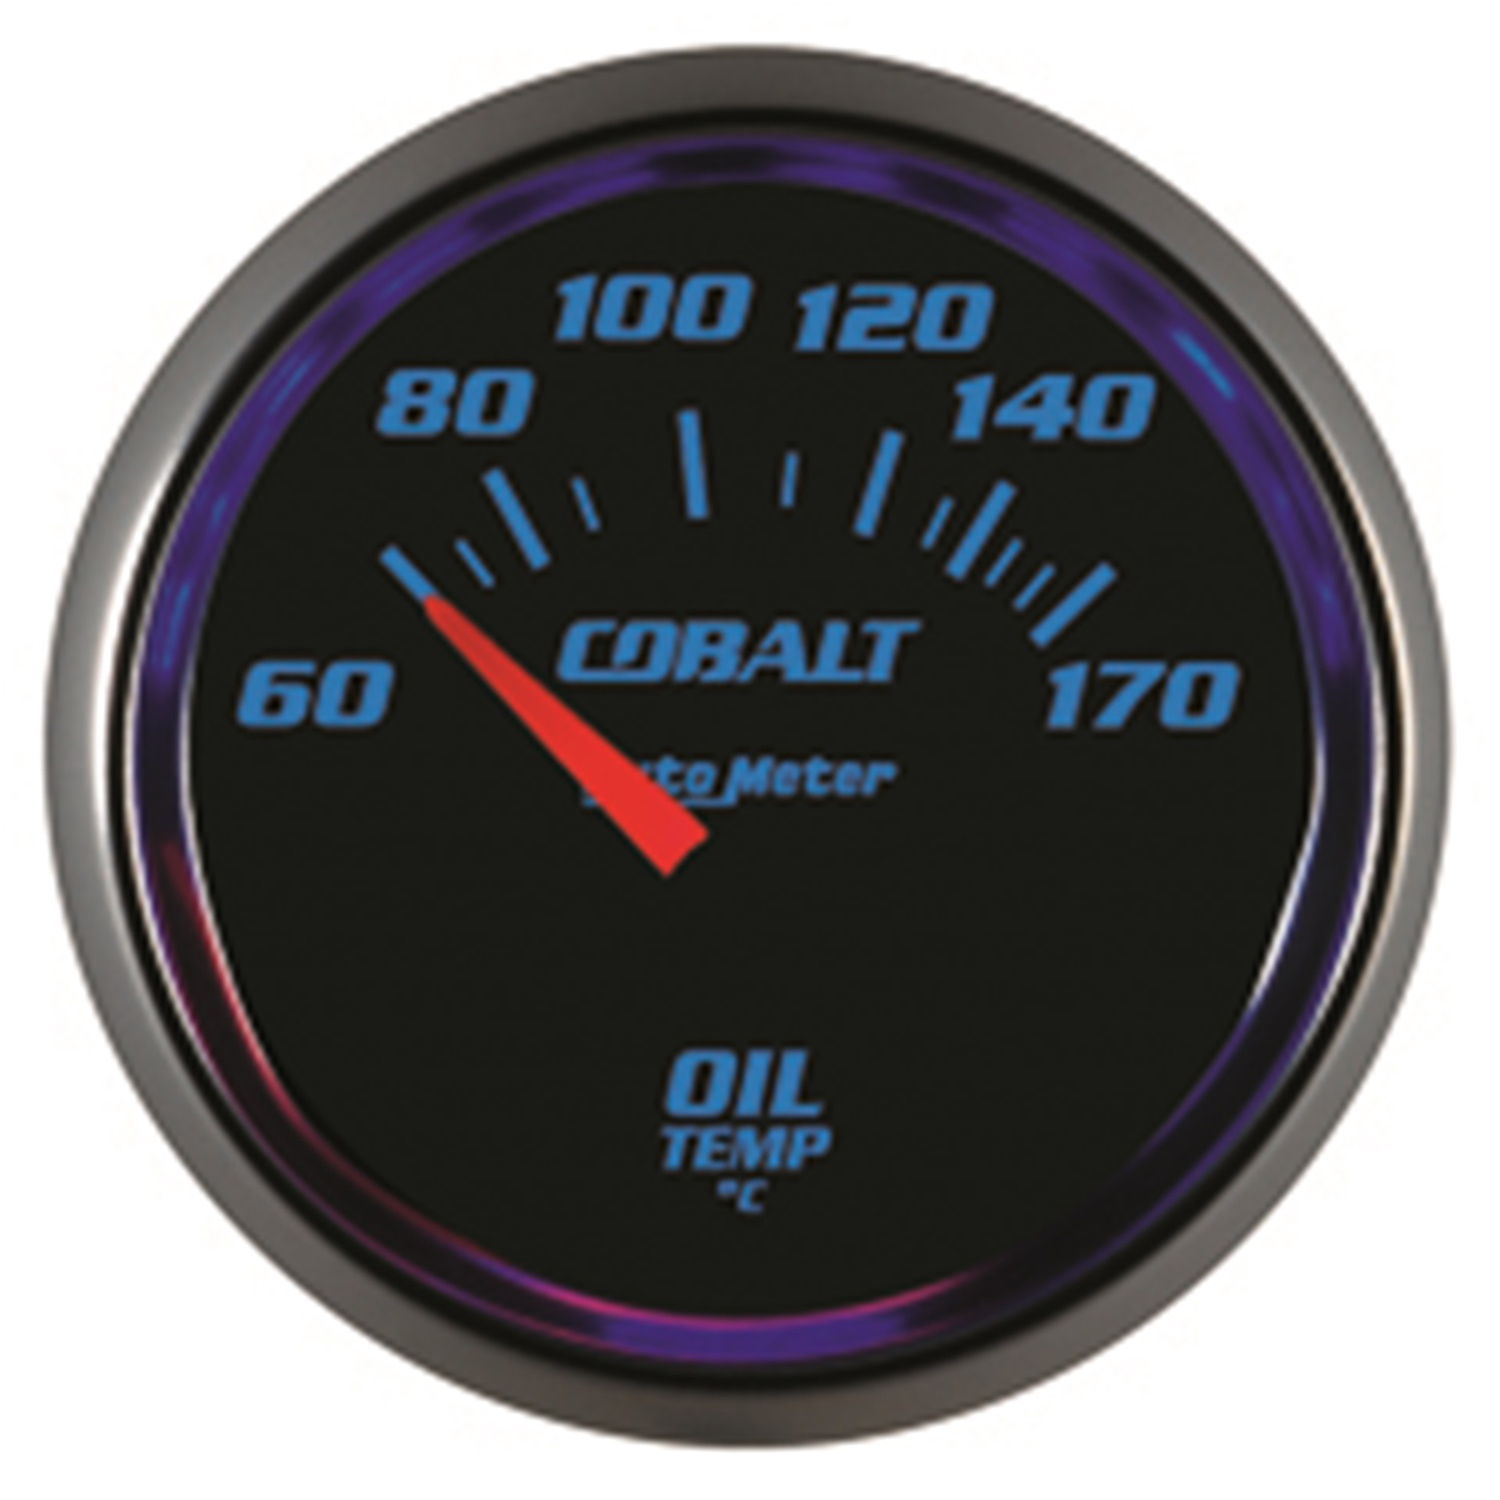 AUTOMETER Oil Temperature Gauge 2 1/16 Inches, 60-170 Degrees, Air Core, Cobalt